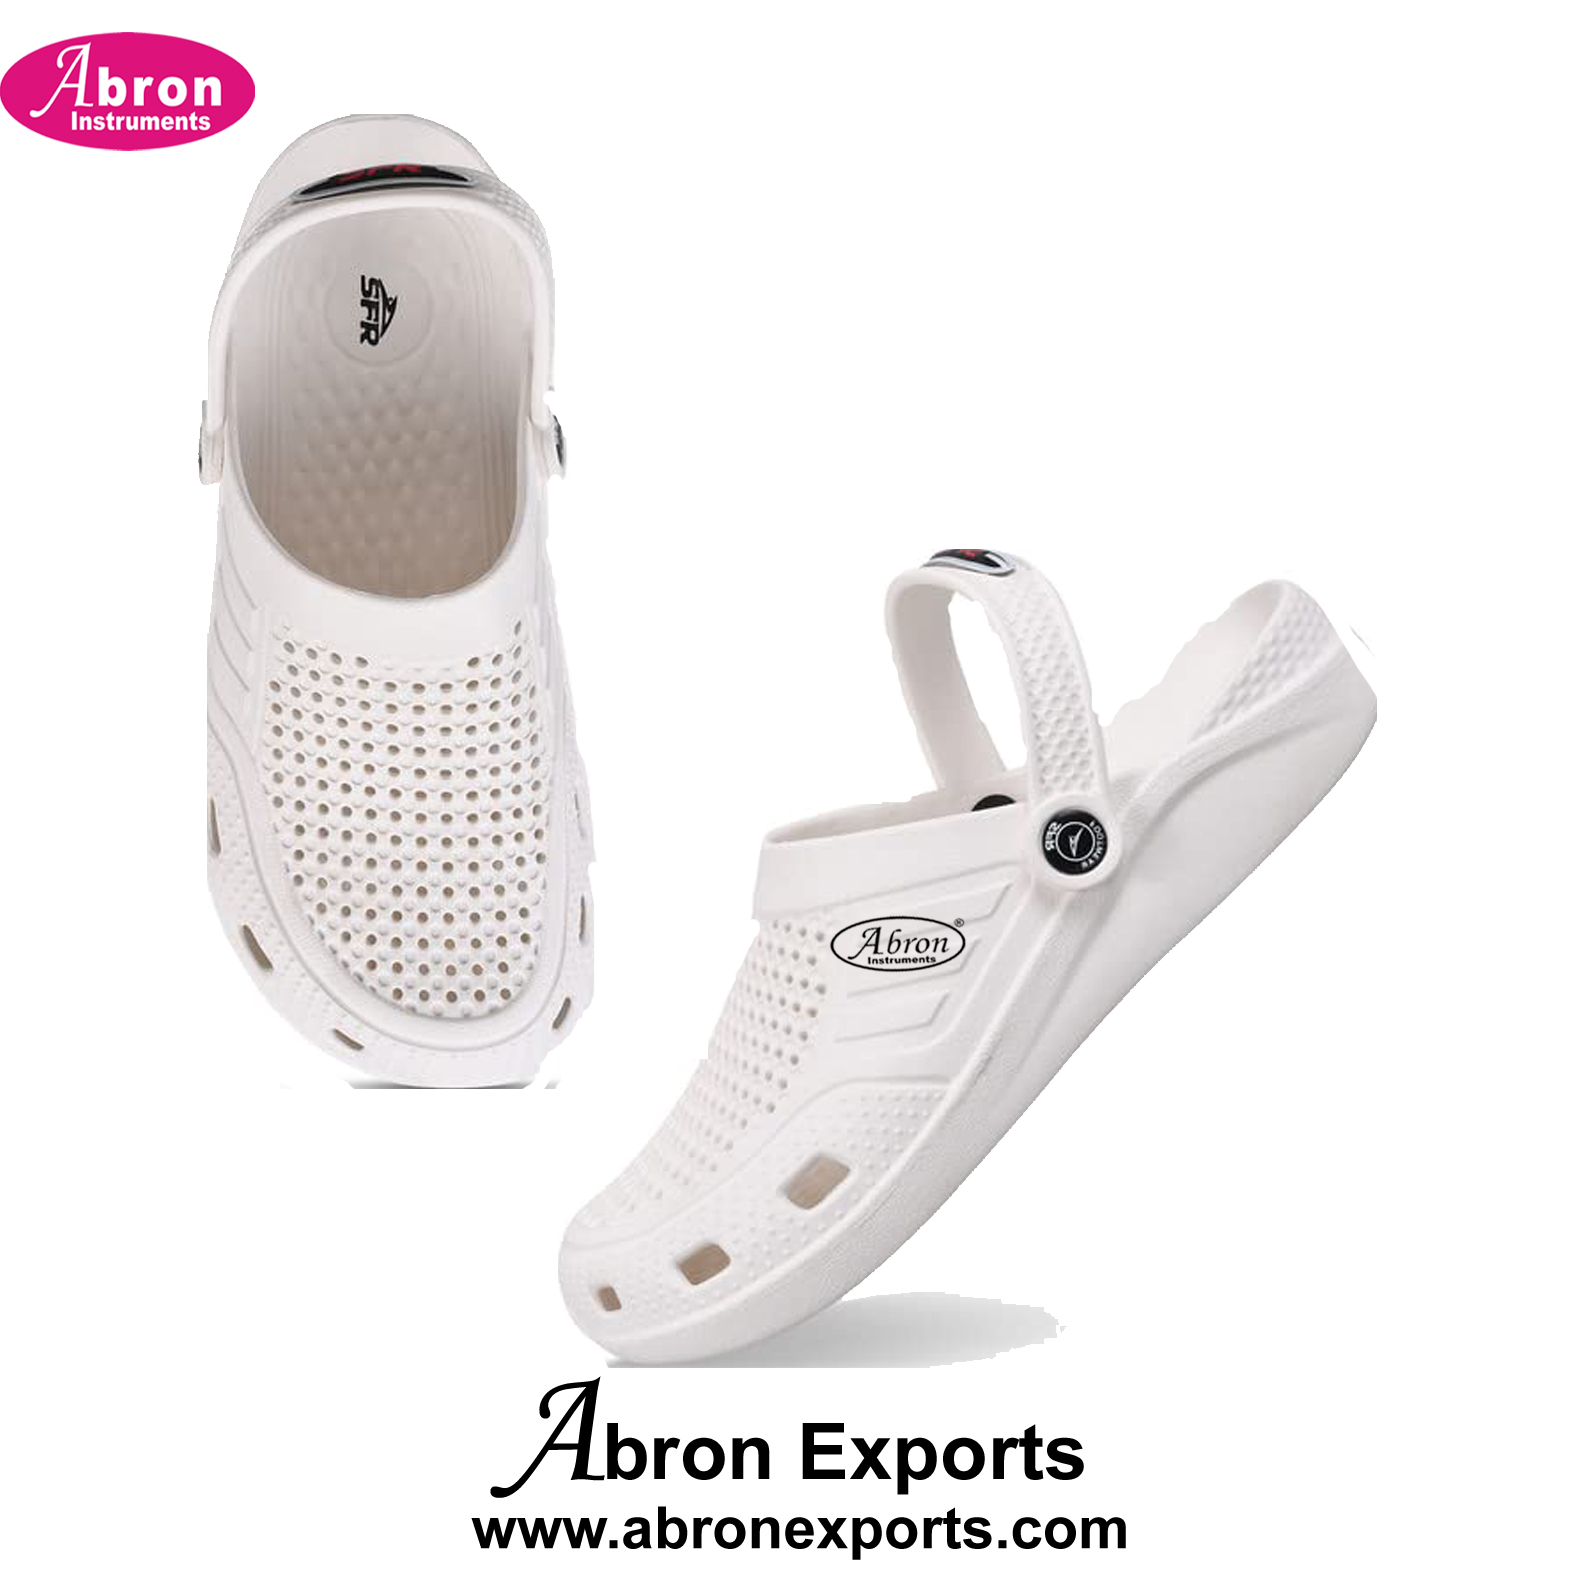 Shoes Rubber Unisex Clogs Water Resistant Sandals Adjustable Strap Anti Skid Washable Abron ABM-2655CW 